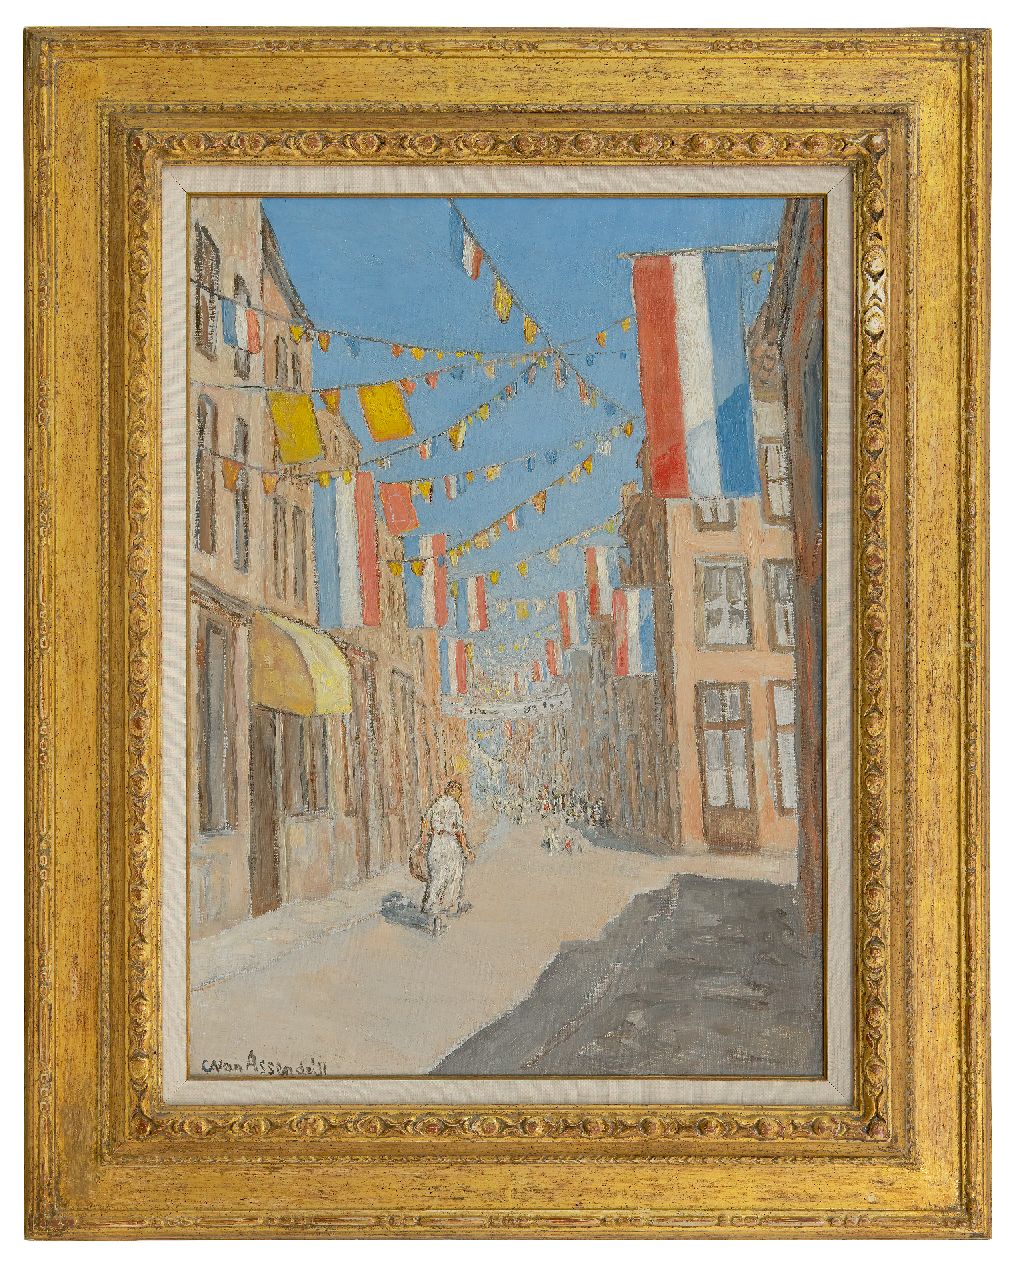 Assendelft C.A. van | Cornelis Albert van Assendelft, Queens day celebrations, oil on canvas 60.0 x 43.3 cm, signed l.l.